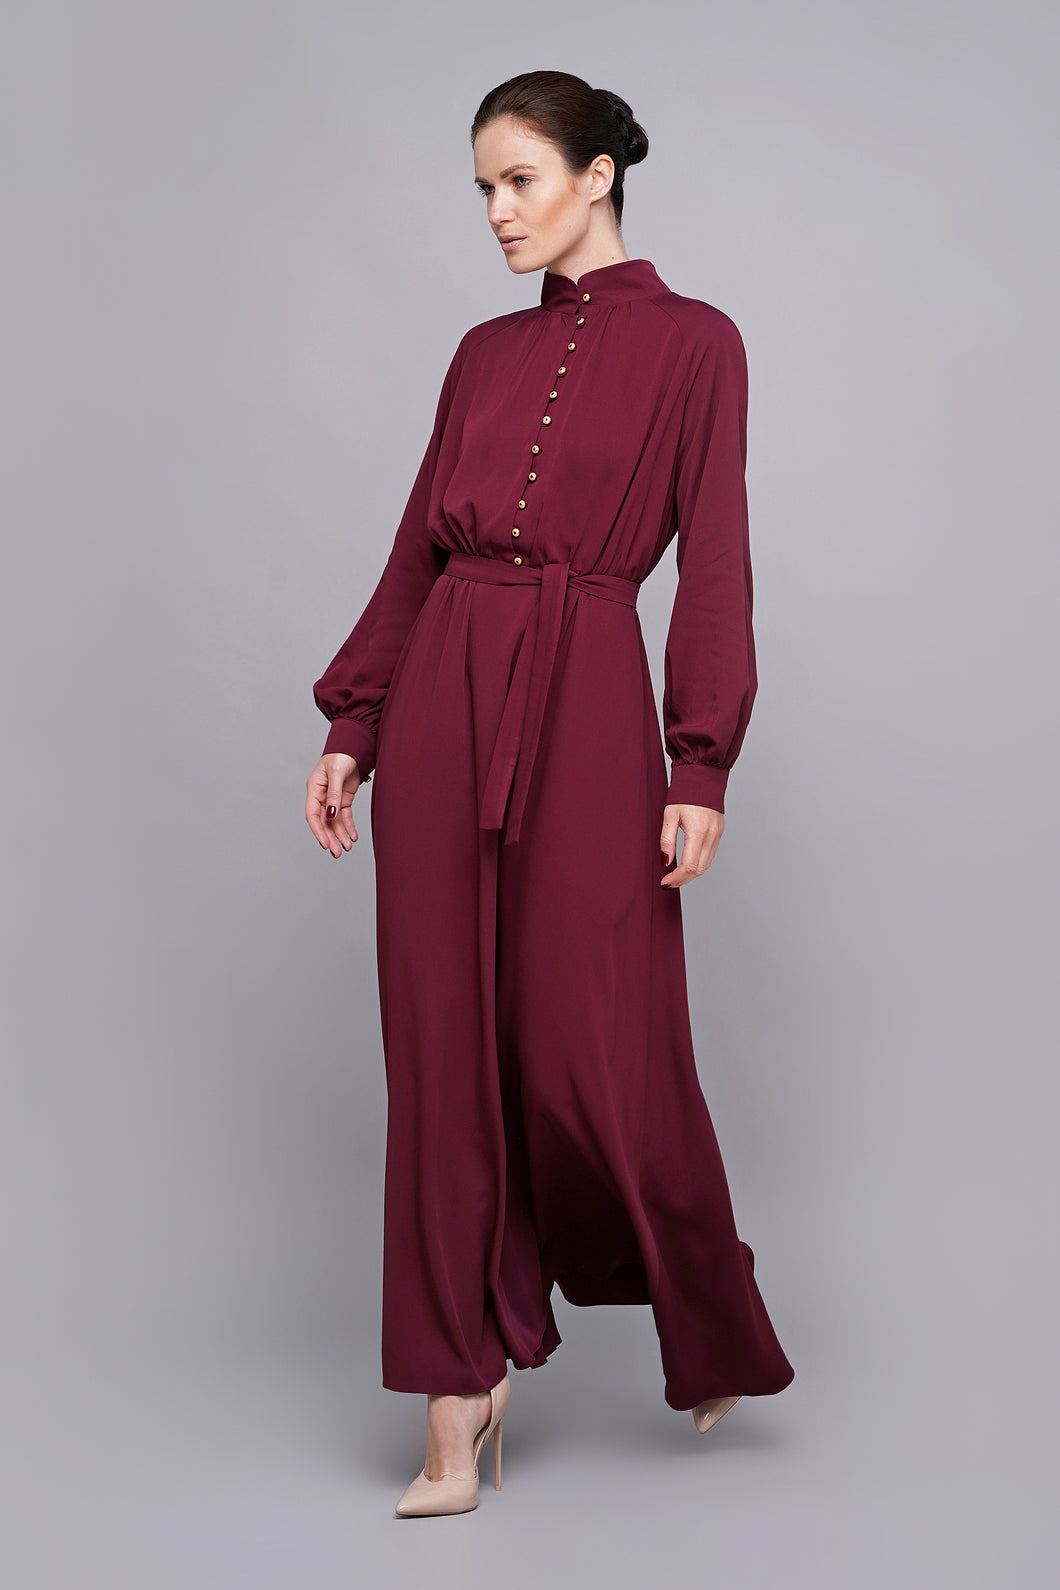 High neck puffy sleeves burgundy maxi dress